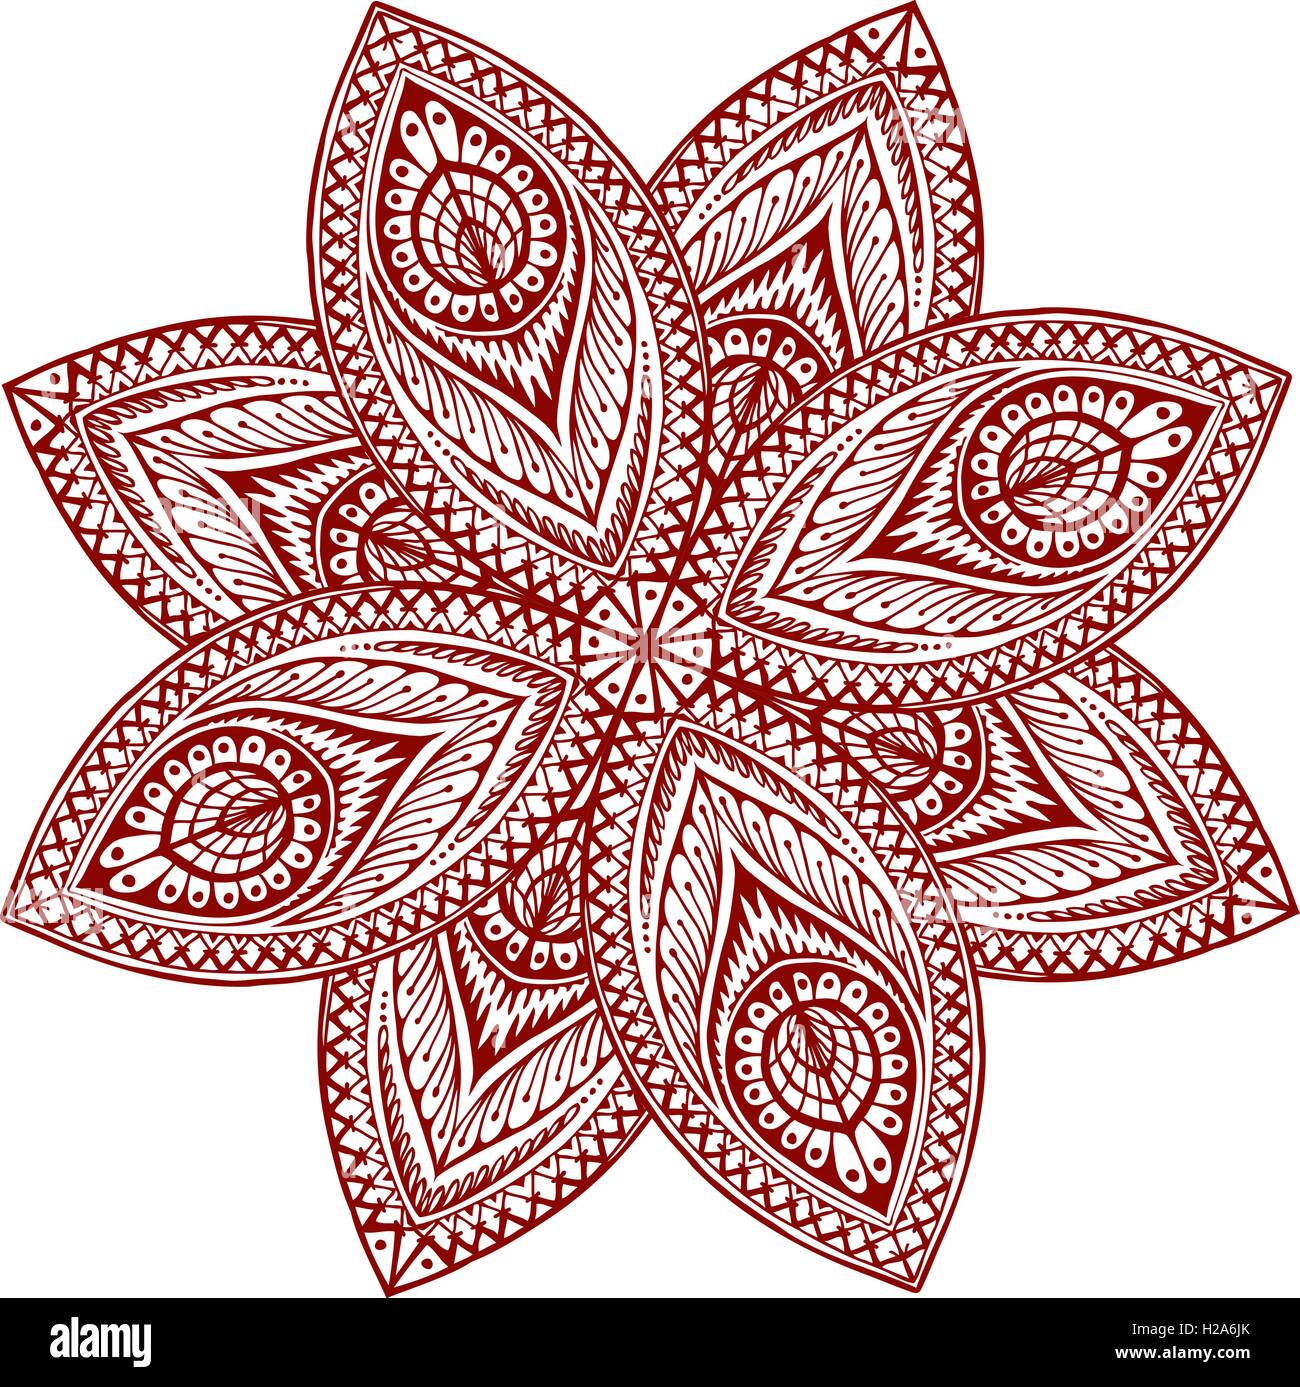 Mandala. Schöne Vintage Runde Muster. Vektor-Illustration von Ethno-Stil Stock Vektor